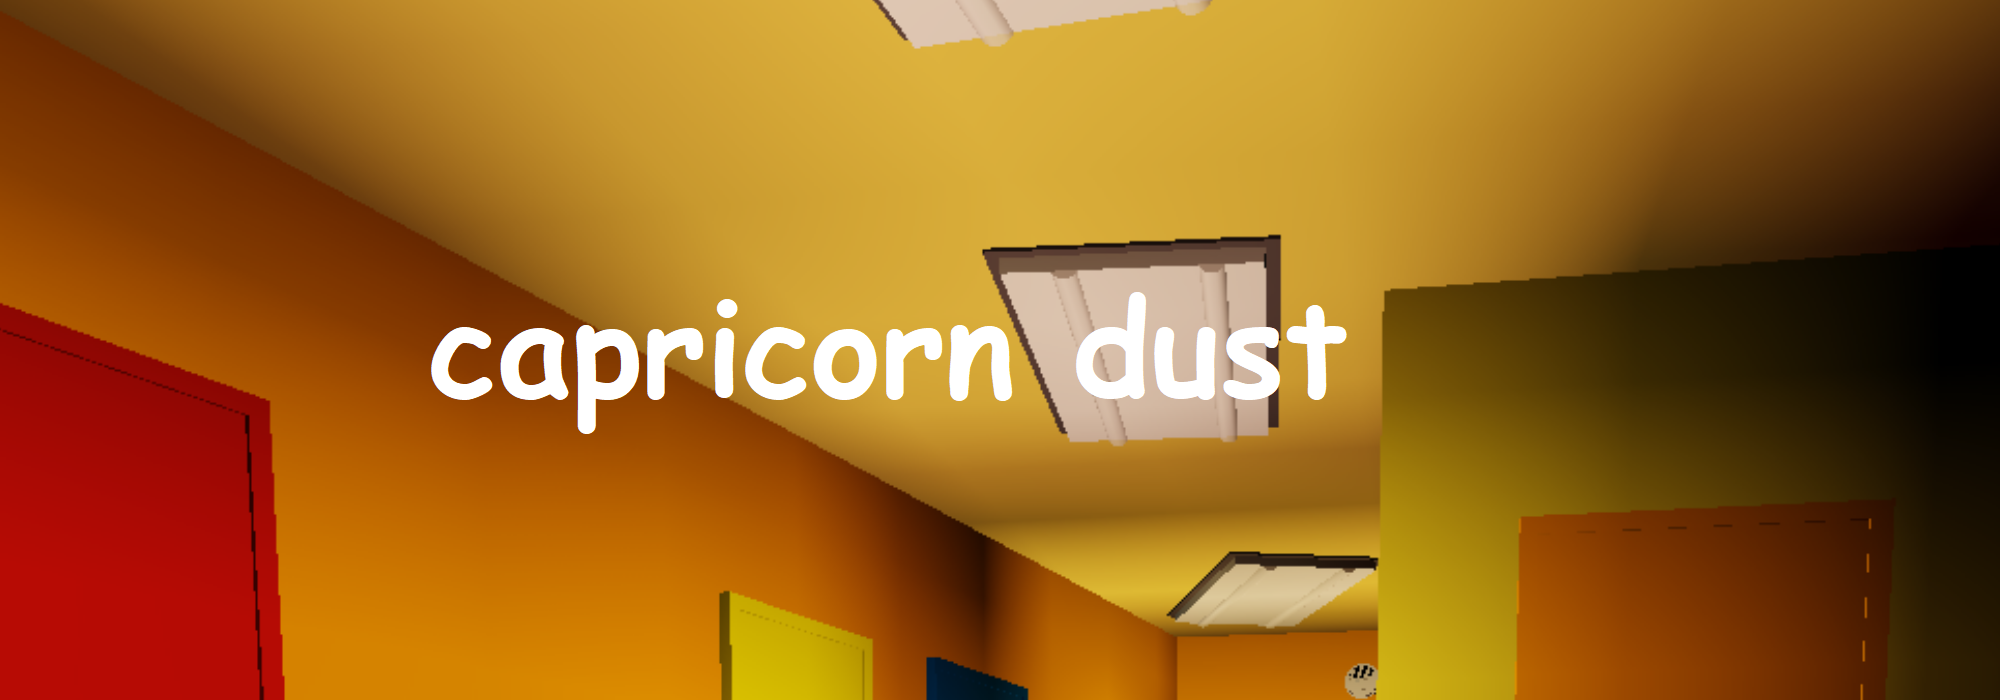 Capricorn Dust